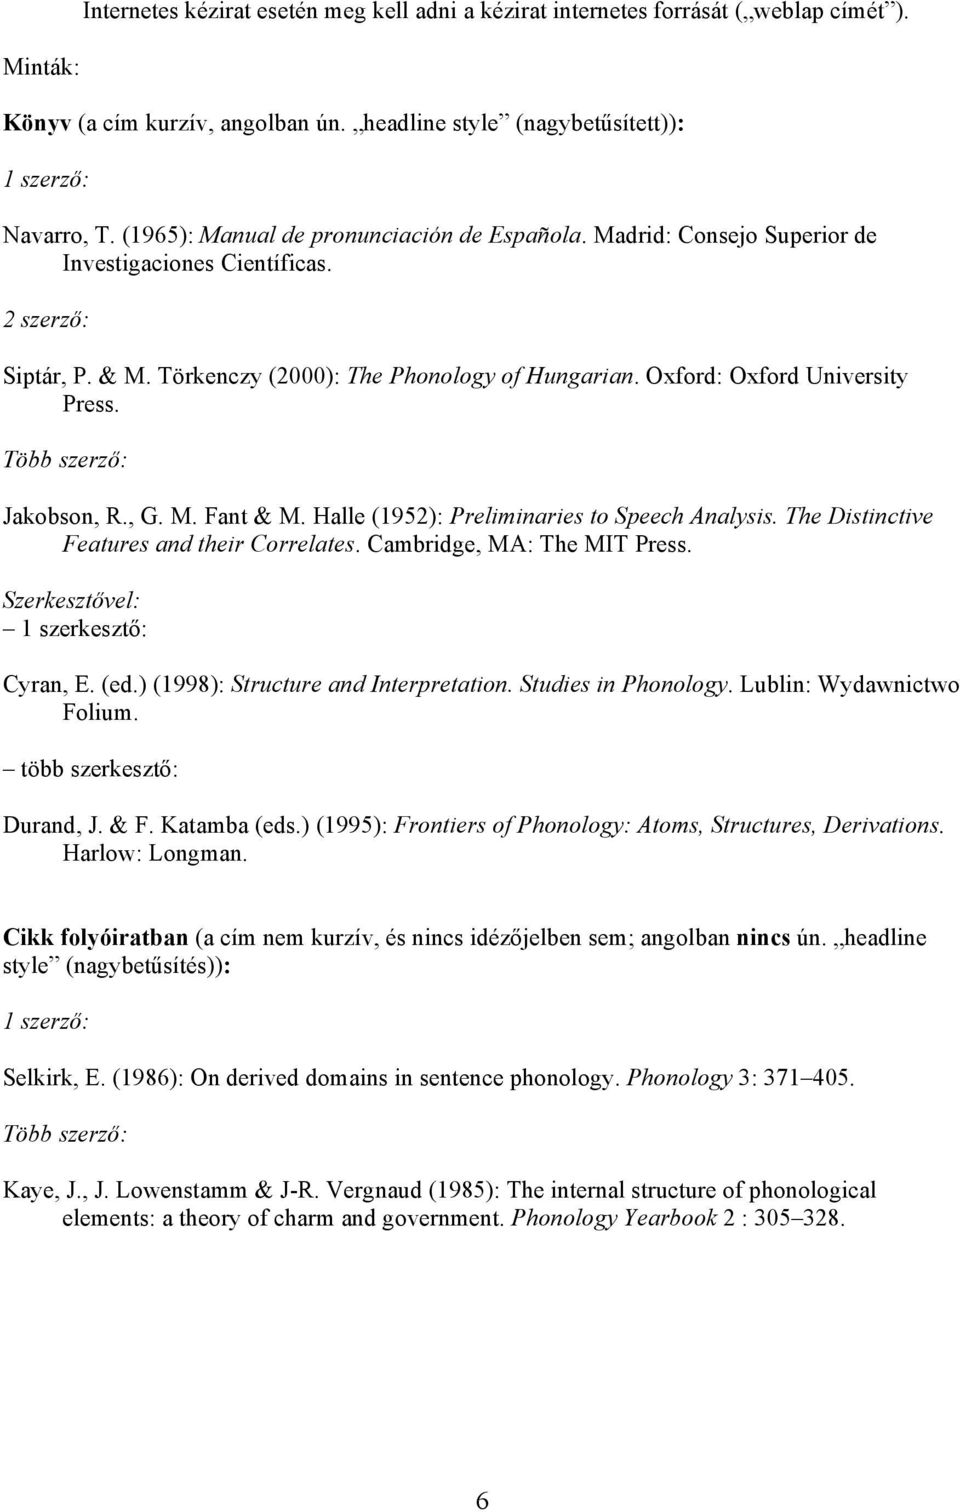 Oxford: Oxford University Press. Több szerző: Jakobson, R., G. M. Fant & M. Halle (1952): Preliminaries to Speech Analysis. The Distinctive Features and their Correlates. Cambridge, MA: The MIT Press.